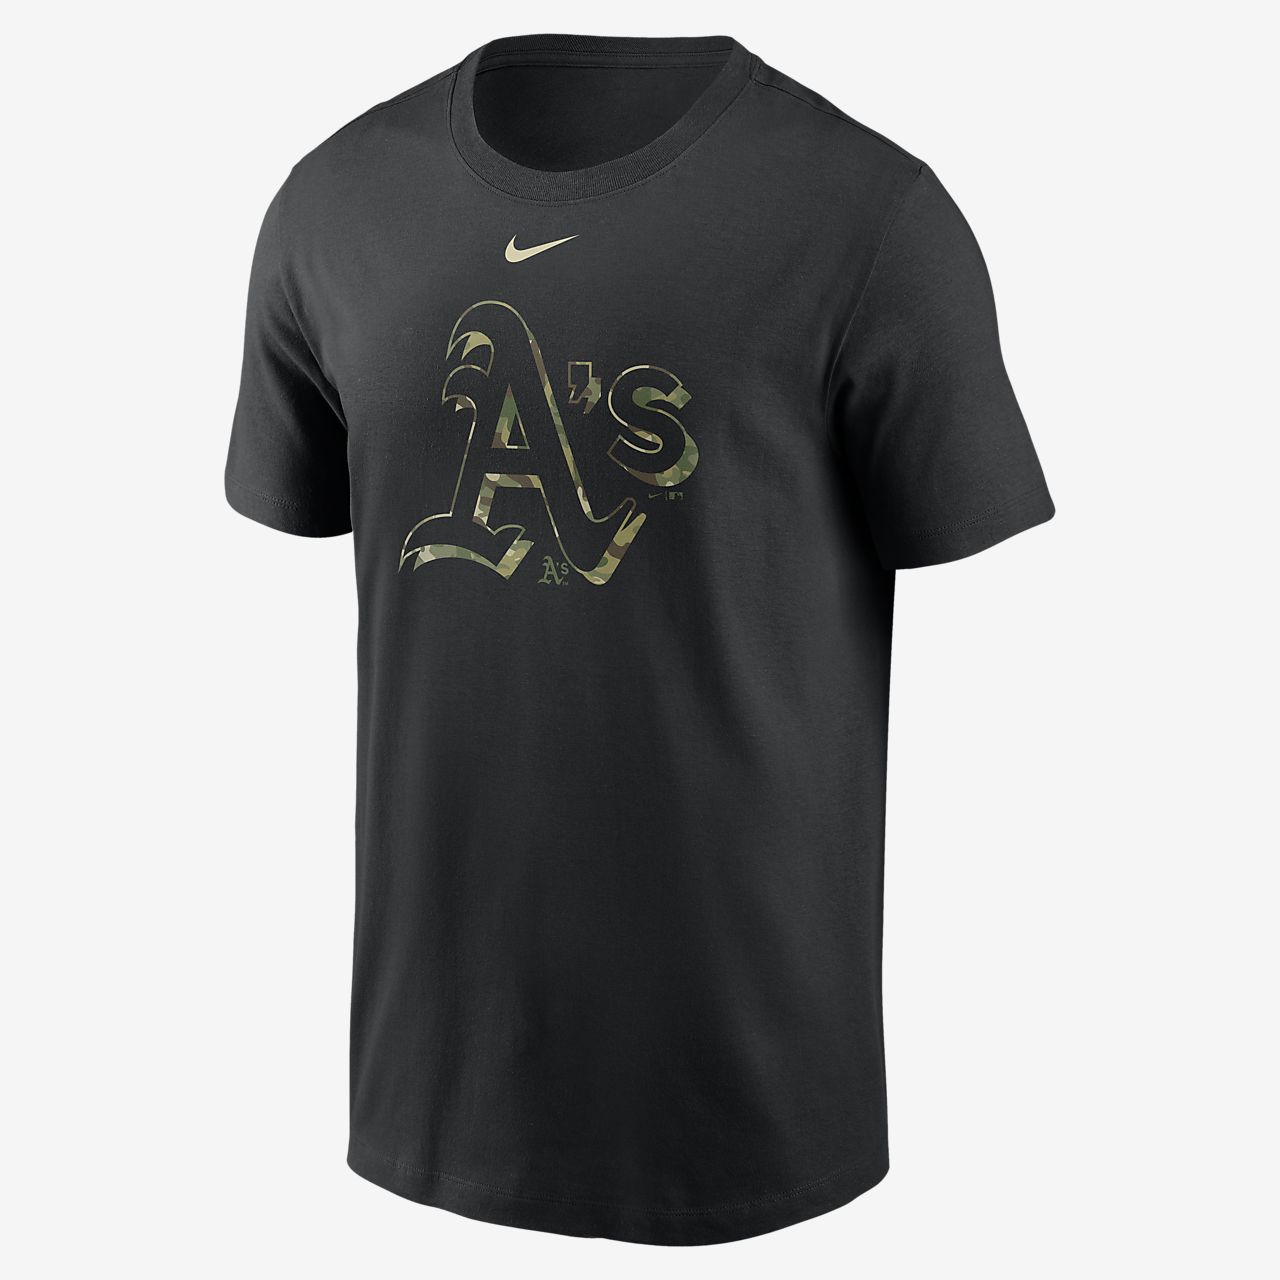 Download Nike Camo Logo (MLB Oakland Athletics) Men's T-Shirt. Nike.com